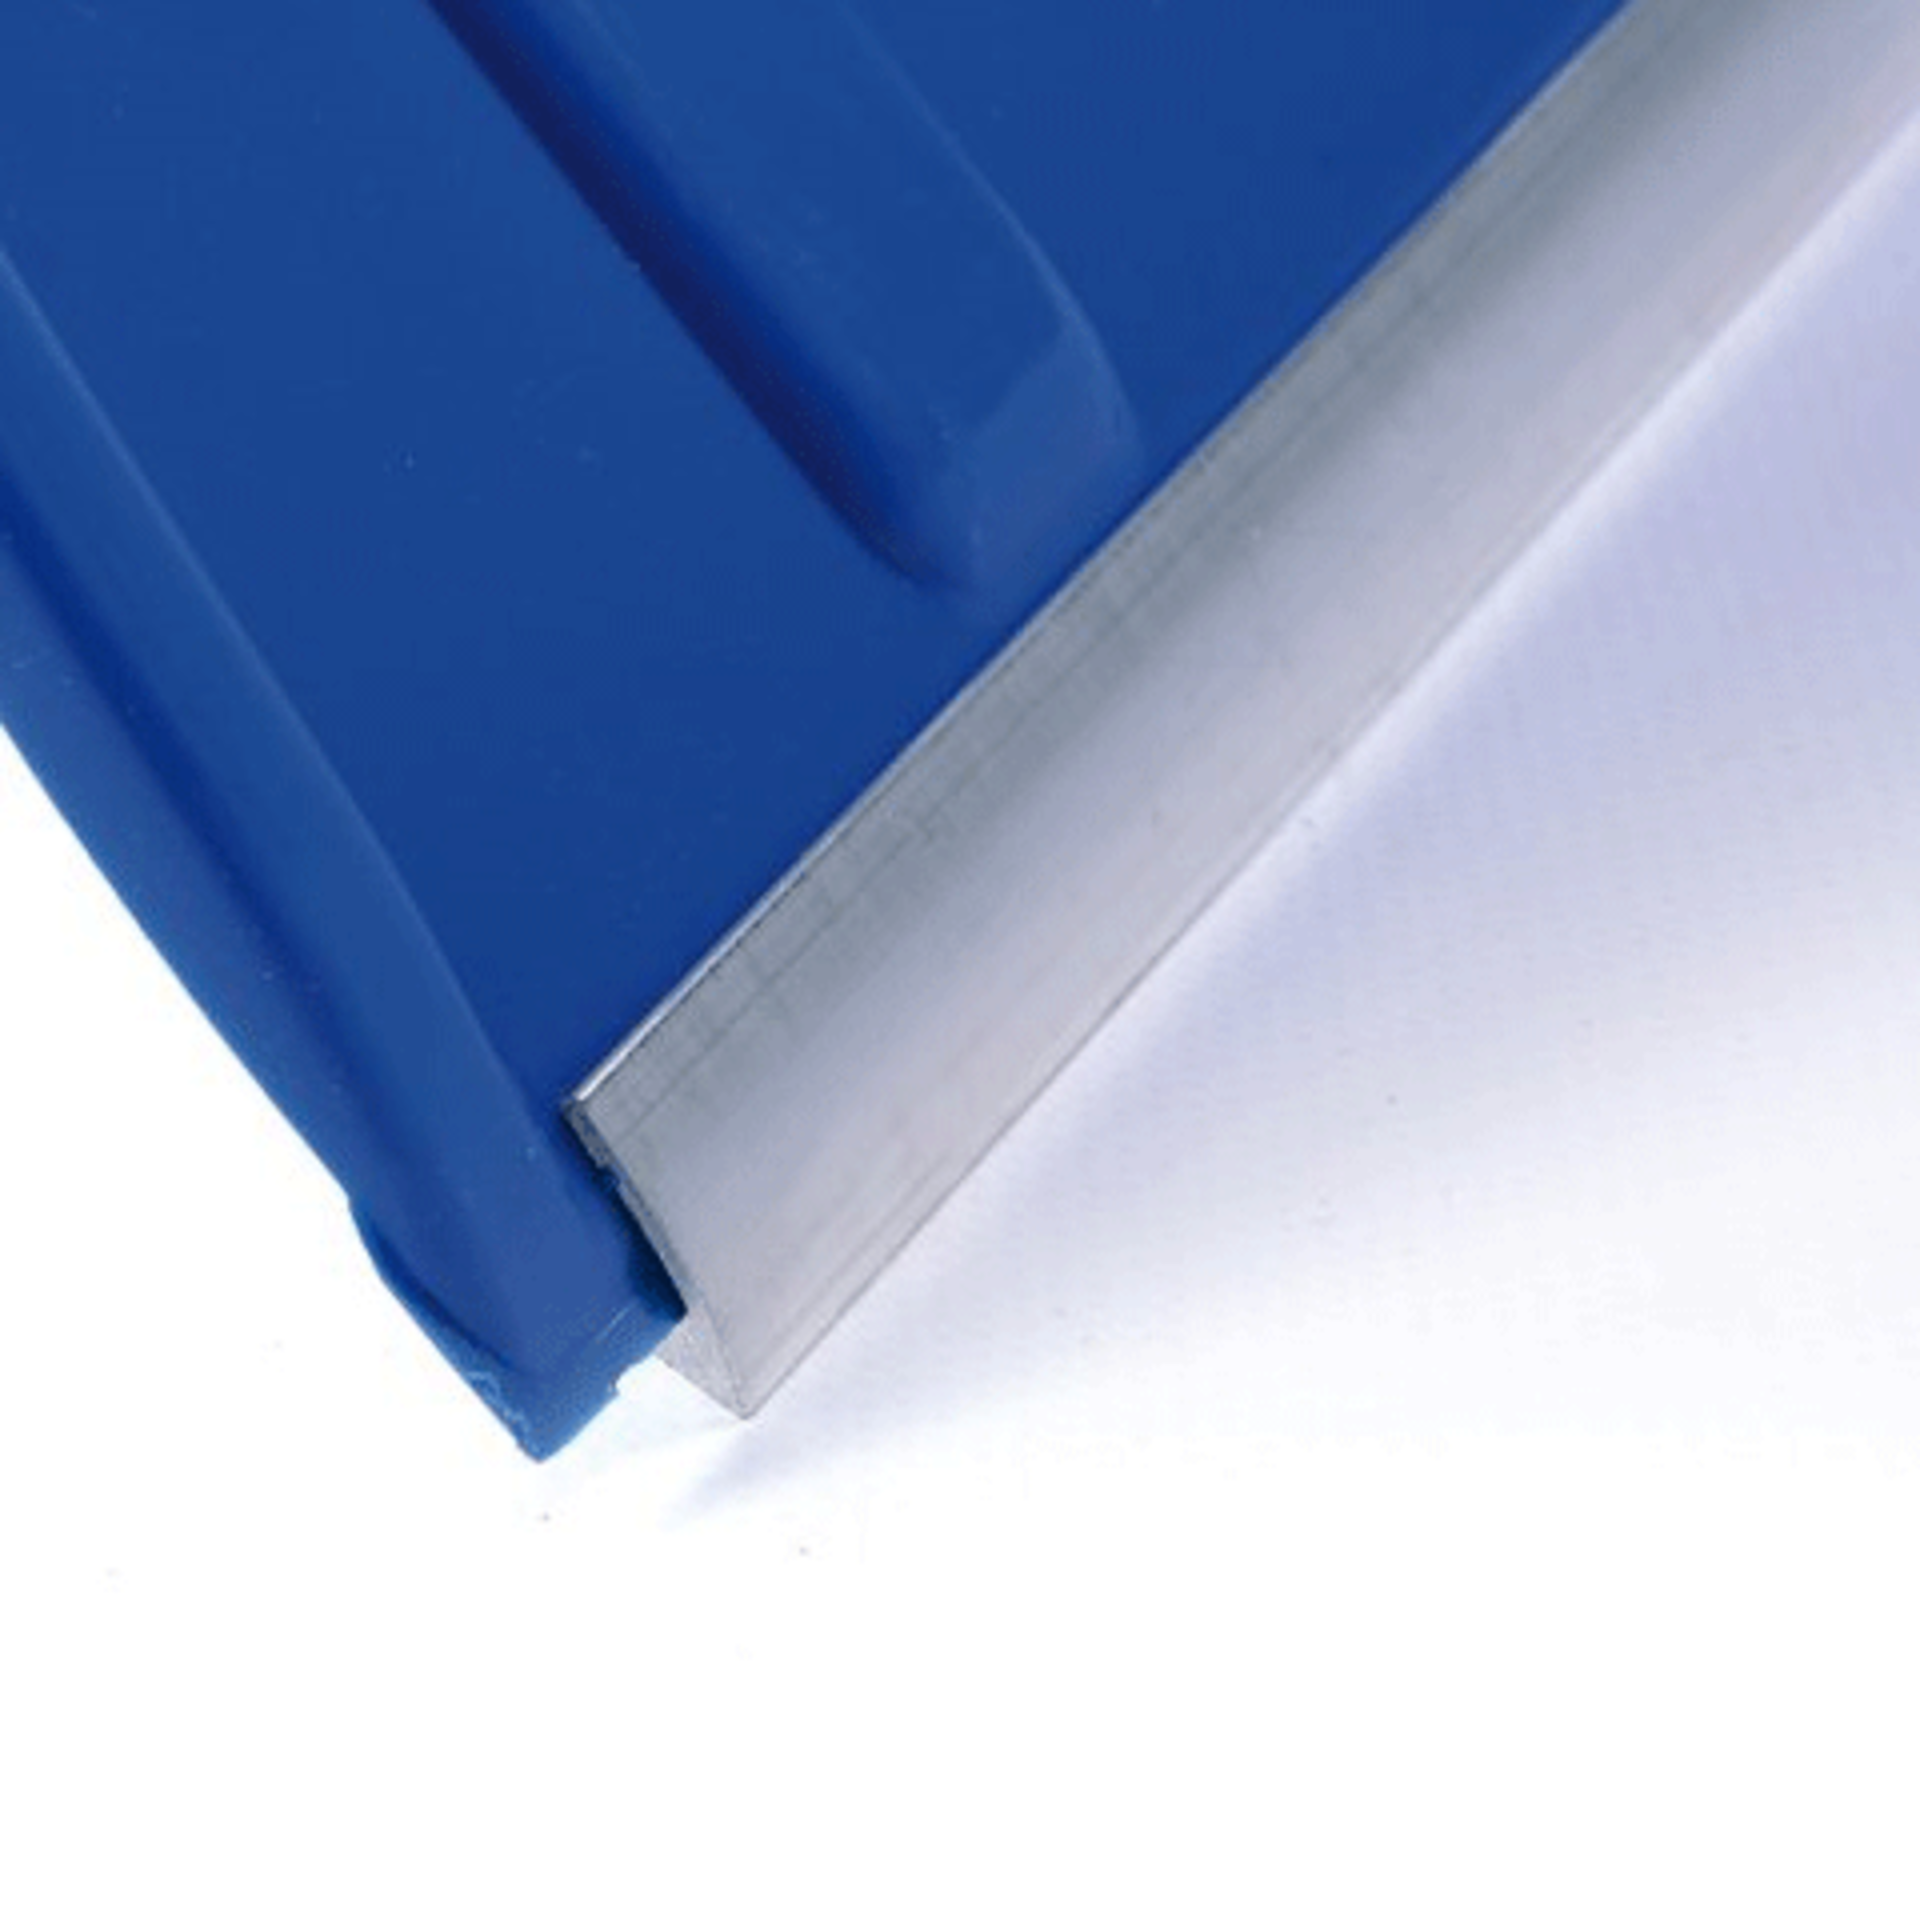 25 x Alpin 2 Alutube Blue Shovel with Metal edge Blade - Image 3 of 3